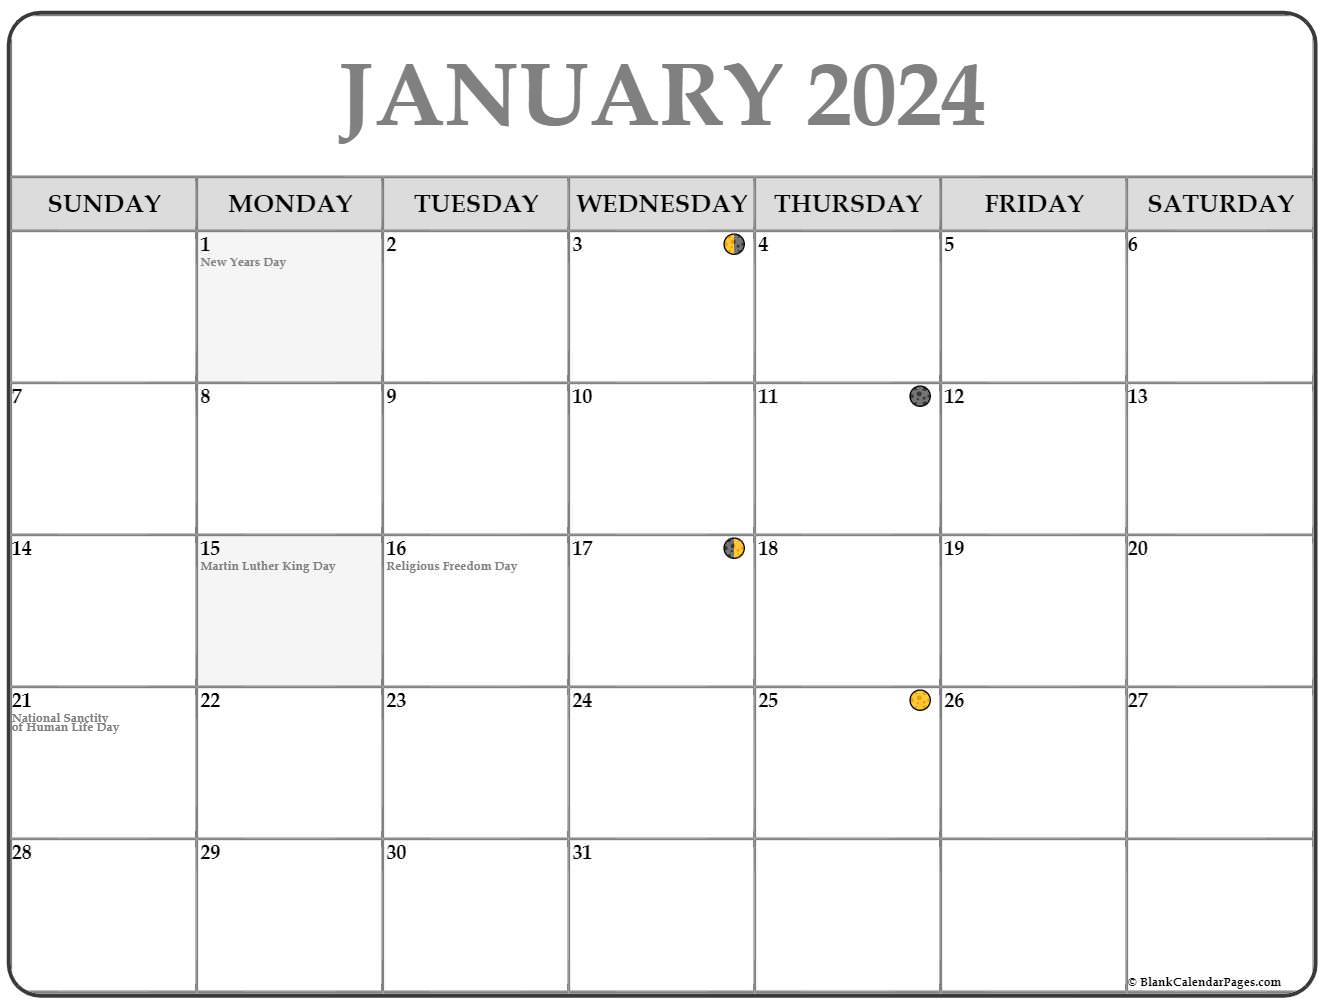 moon-phase-january-2023-2023-calendar